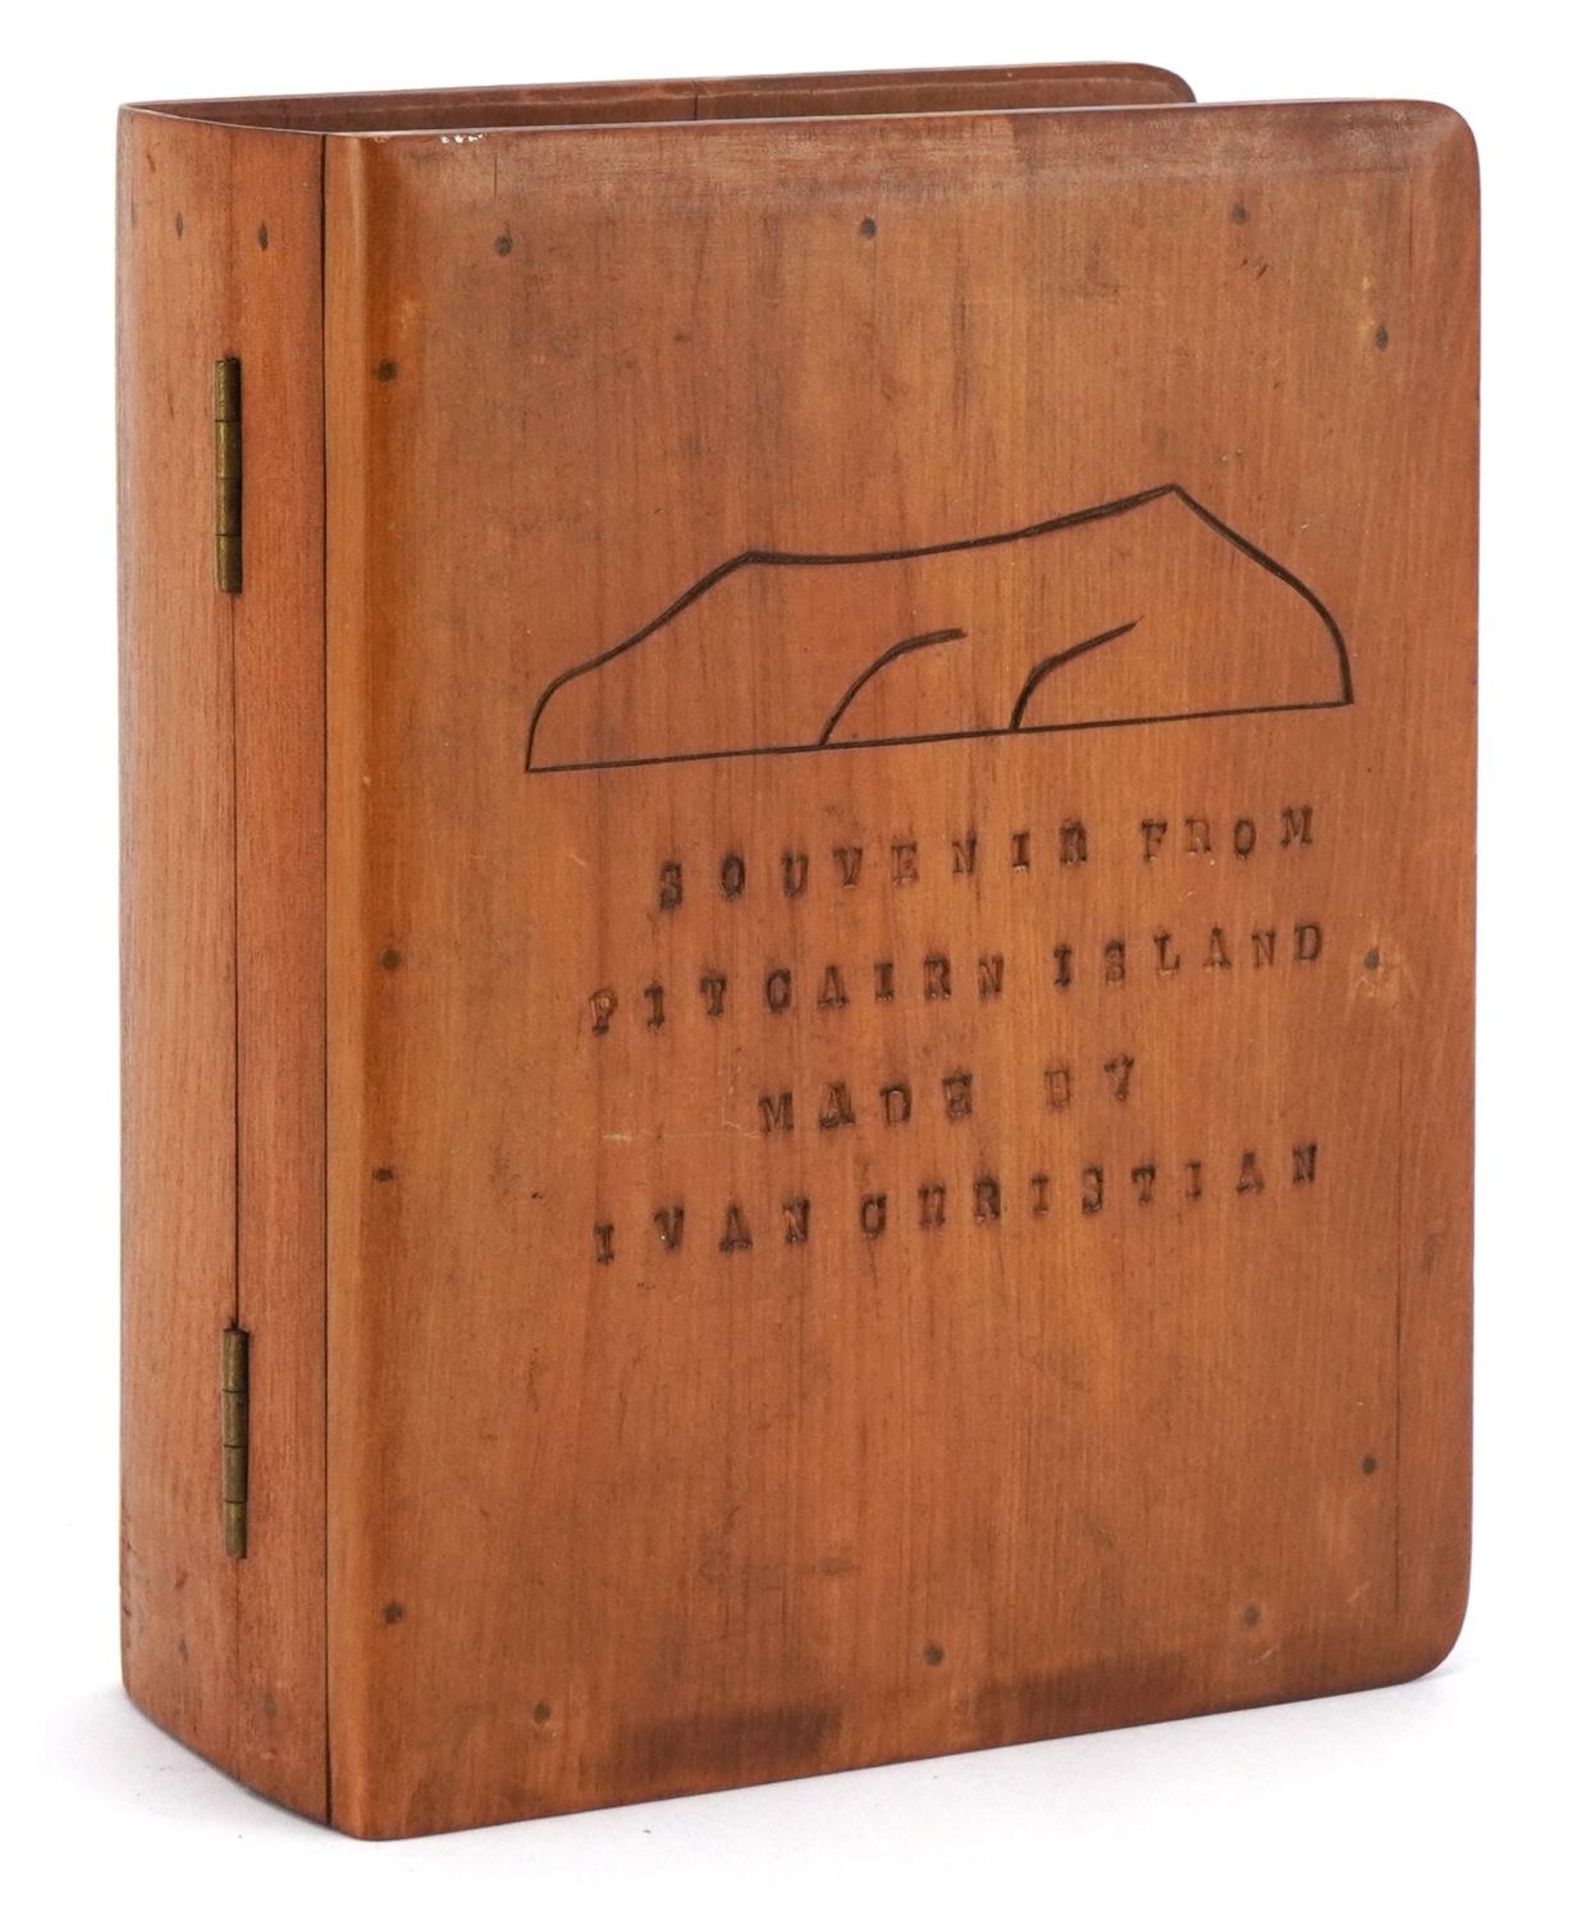 Pitcairn Island souvenir book design box made by Ivan Christian, 7cm H x 19cm W x 14.5cm D